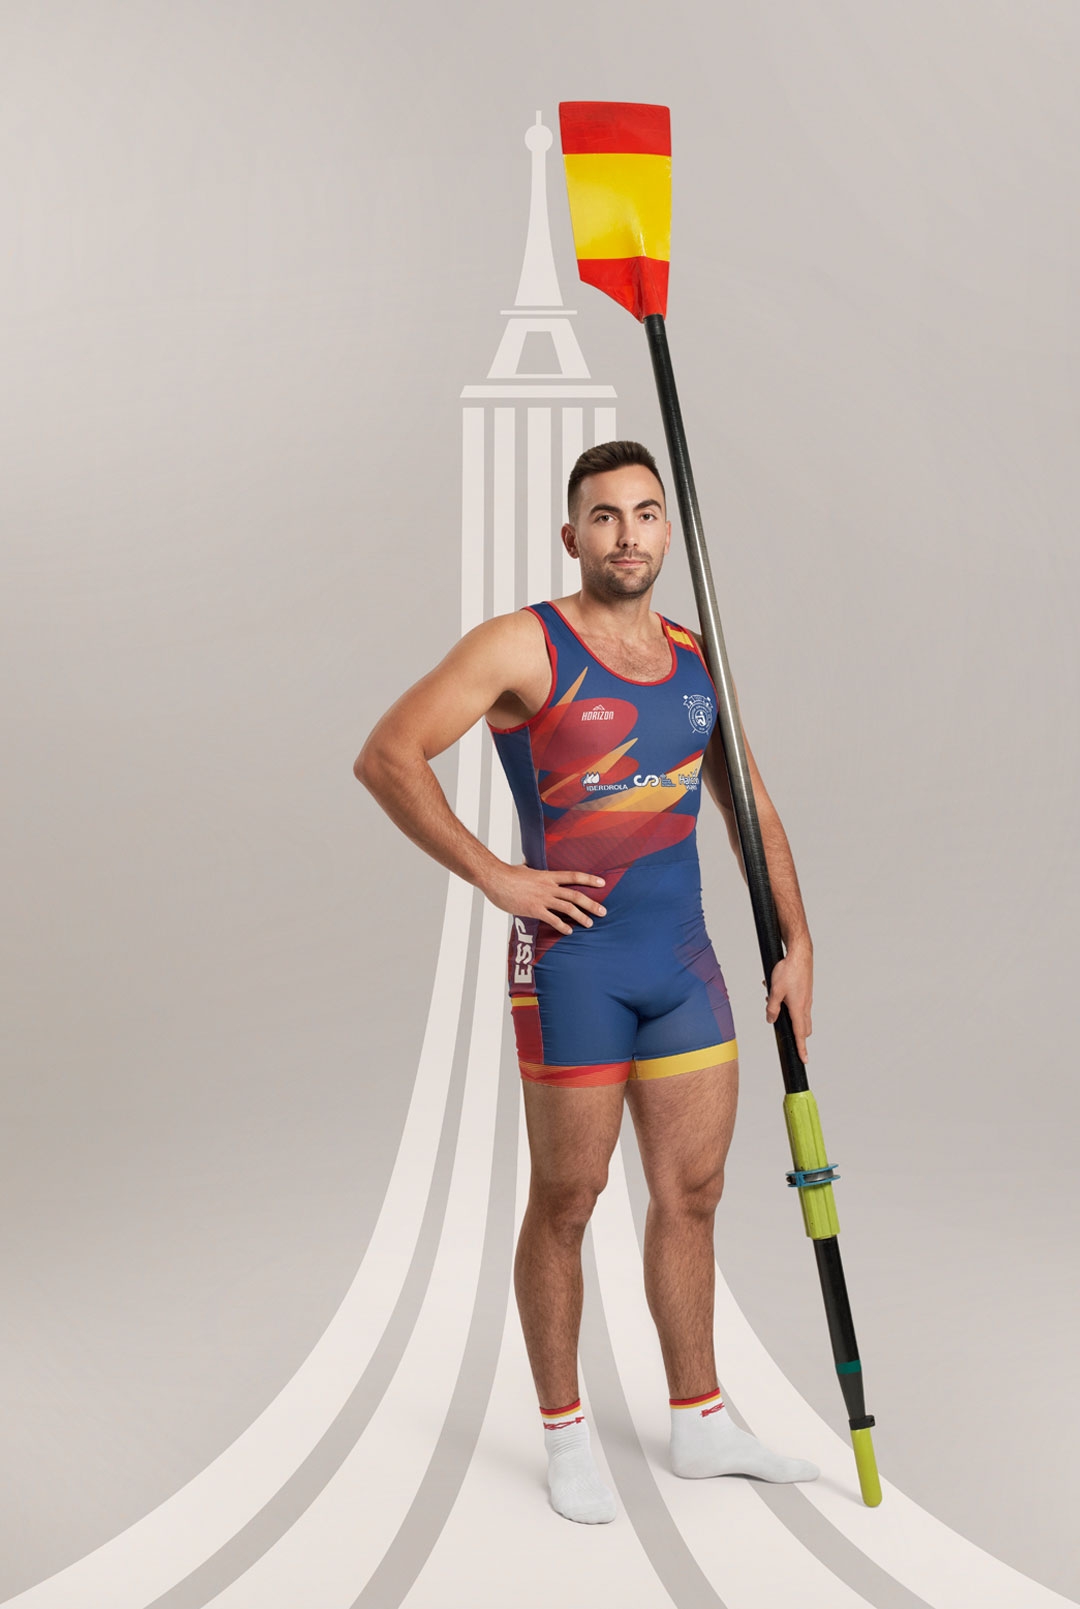 Rodrigo Conde hopes to win a medal at the Paris Olympics alongside his rowing partner Aleix García